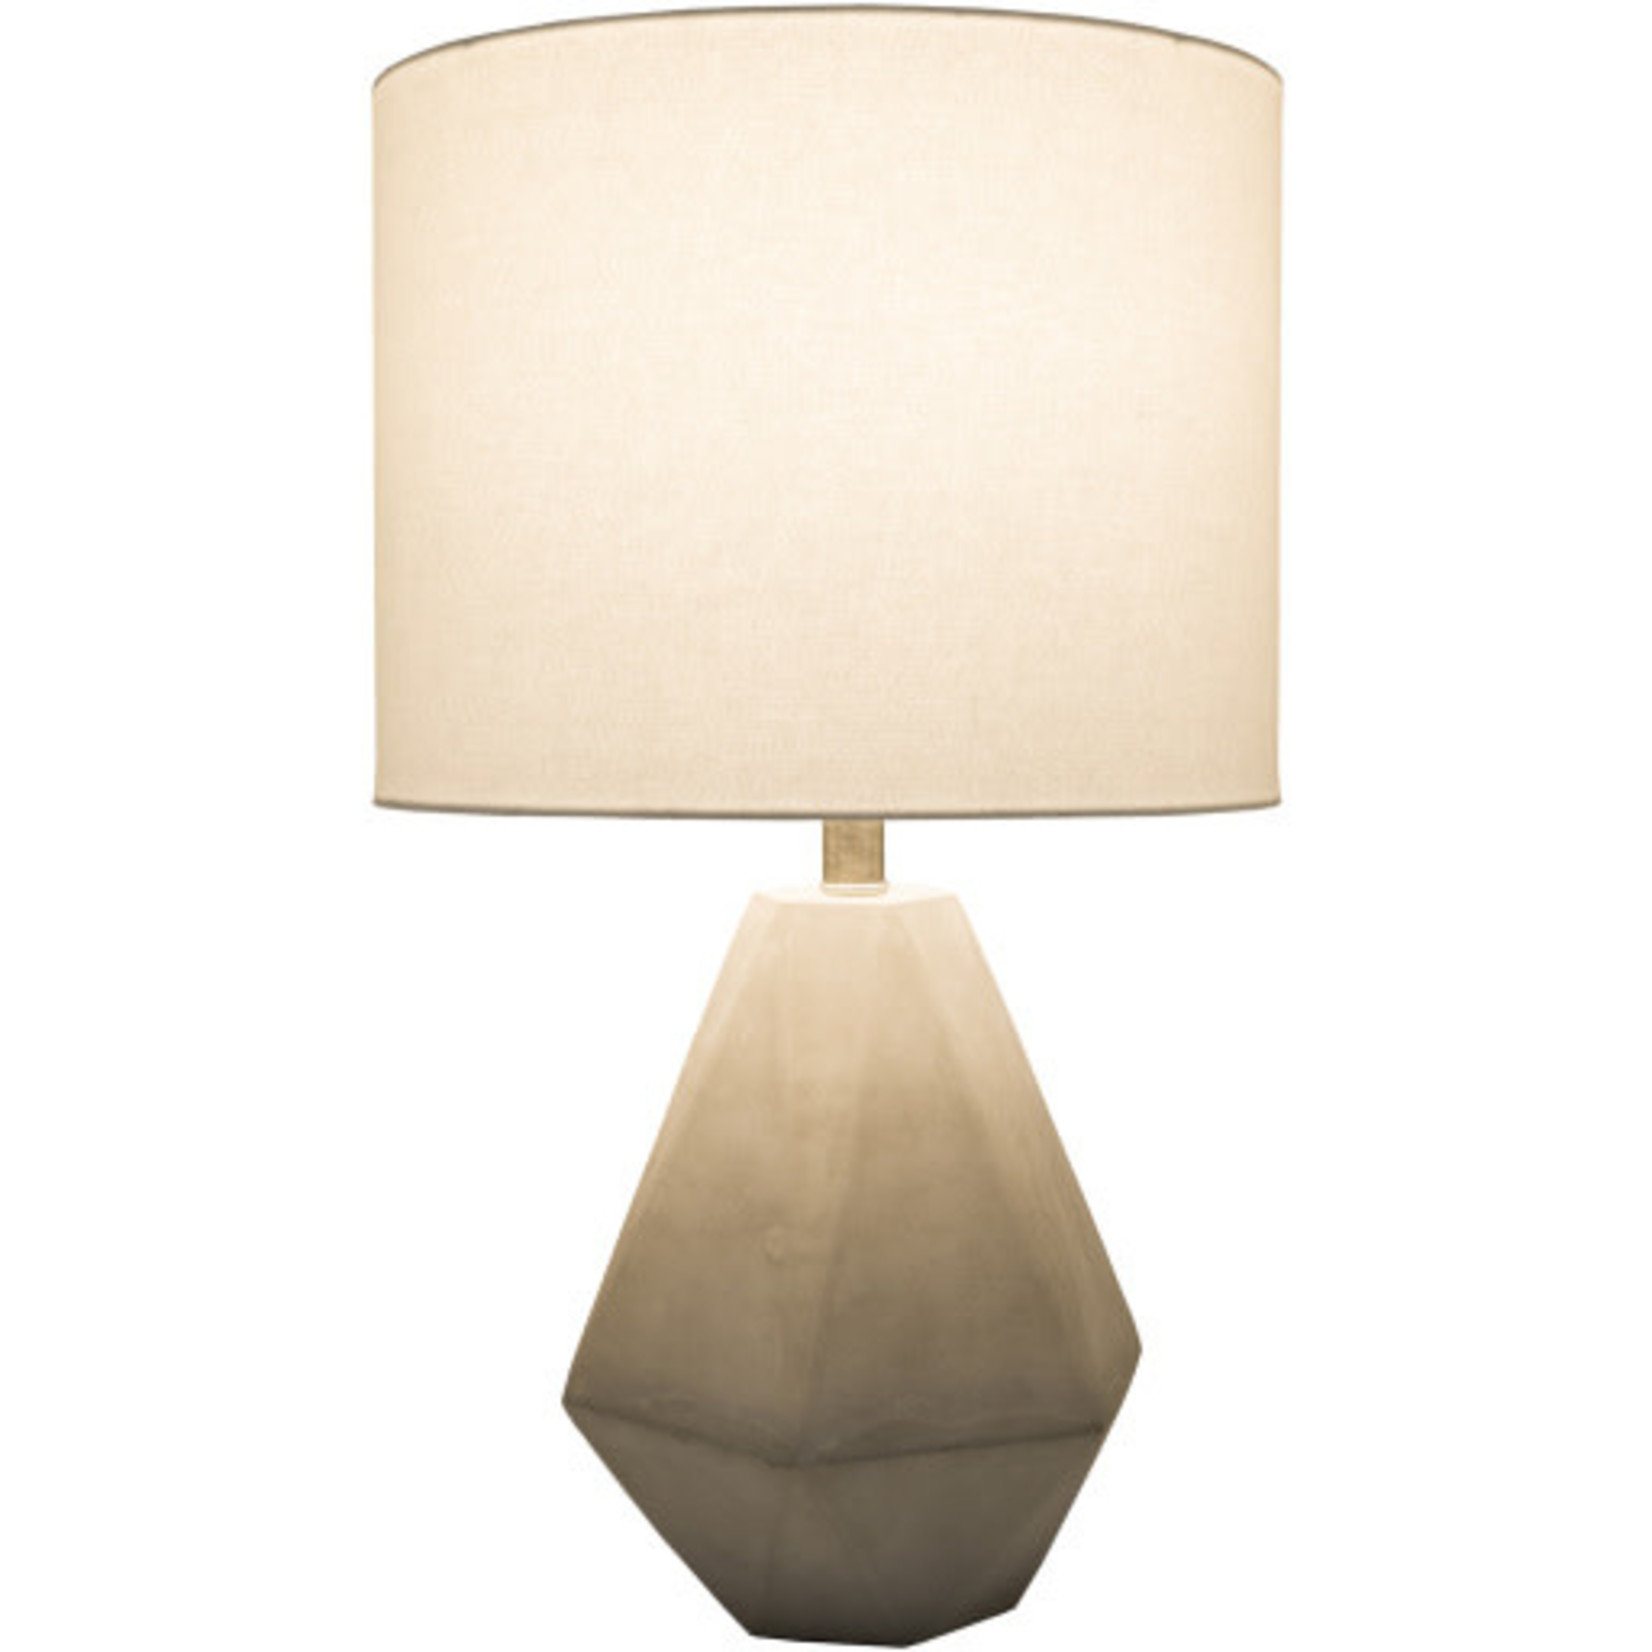 Mickler & Co. Stone Grey Table Lamp